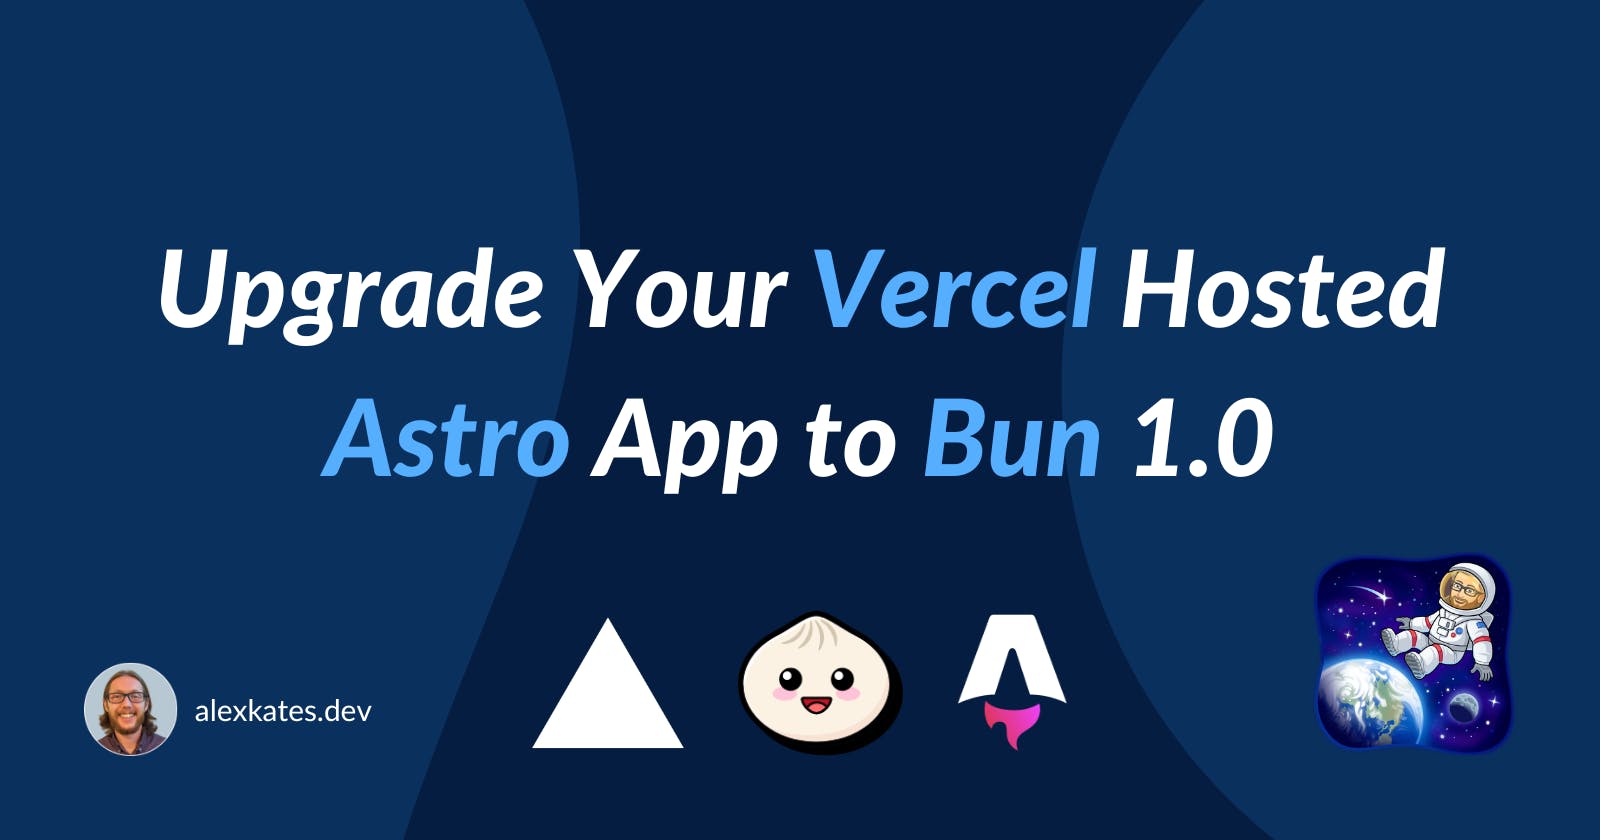 Upgrade Your Vercel Hosted Astro App to Bun 1.0